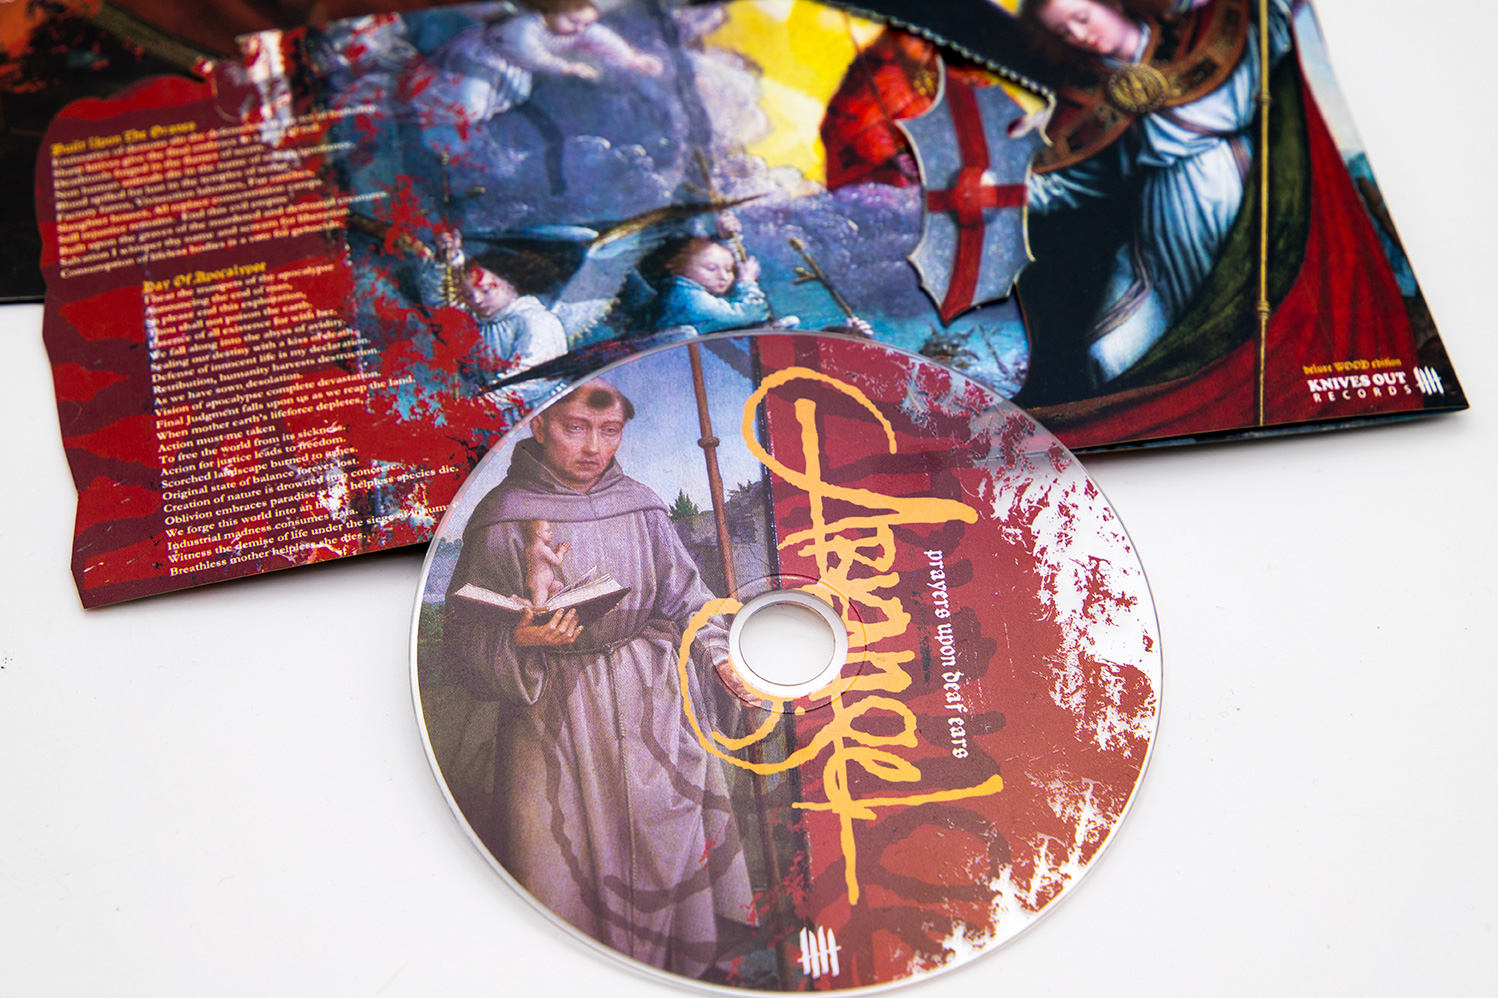 ARKANGEL "Prayers Upon Deaf Ears" Deluxe Digipack clear CD